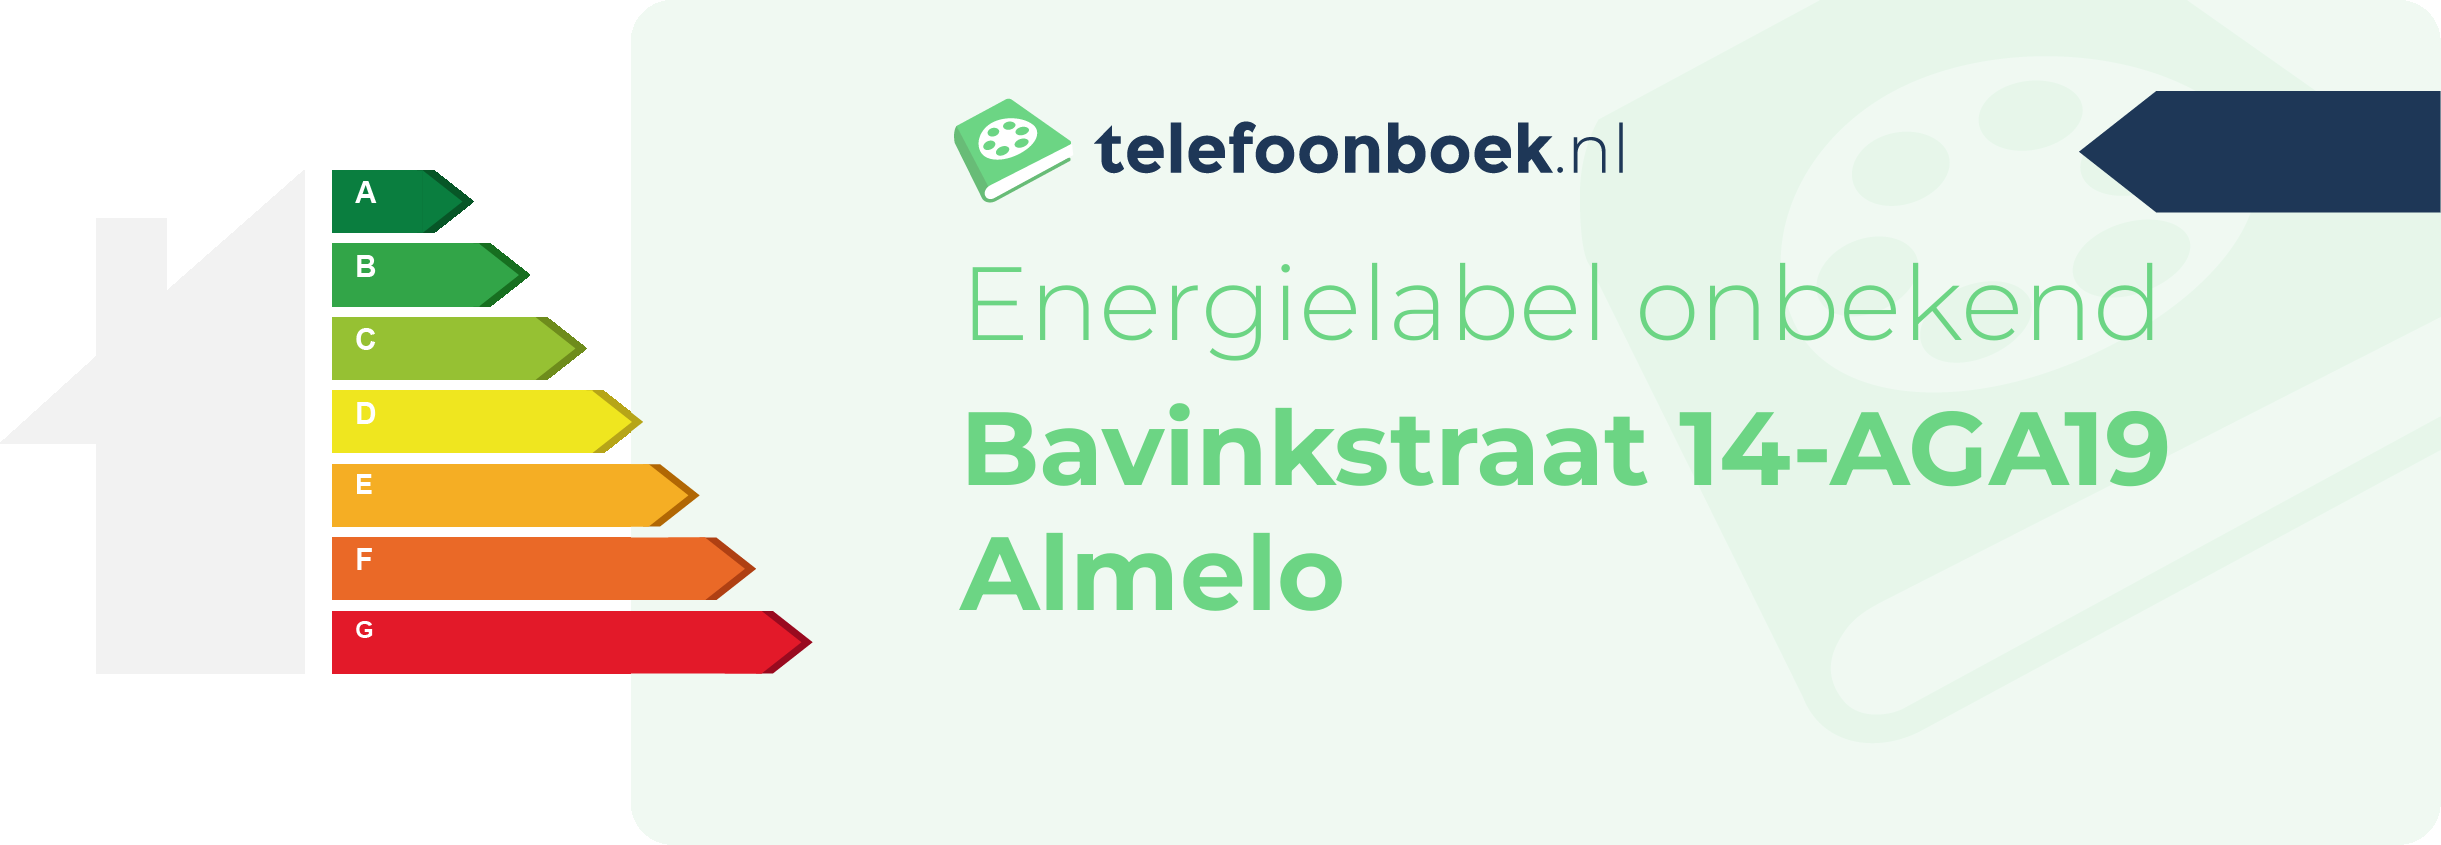 Energielabel Bavinkstraat 14-AGA19 Almelo